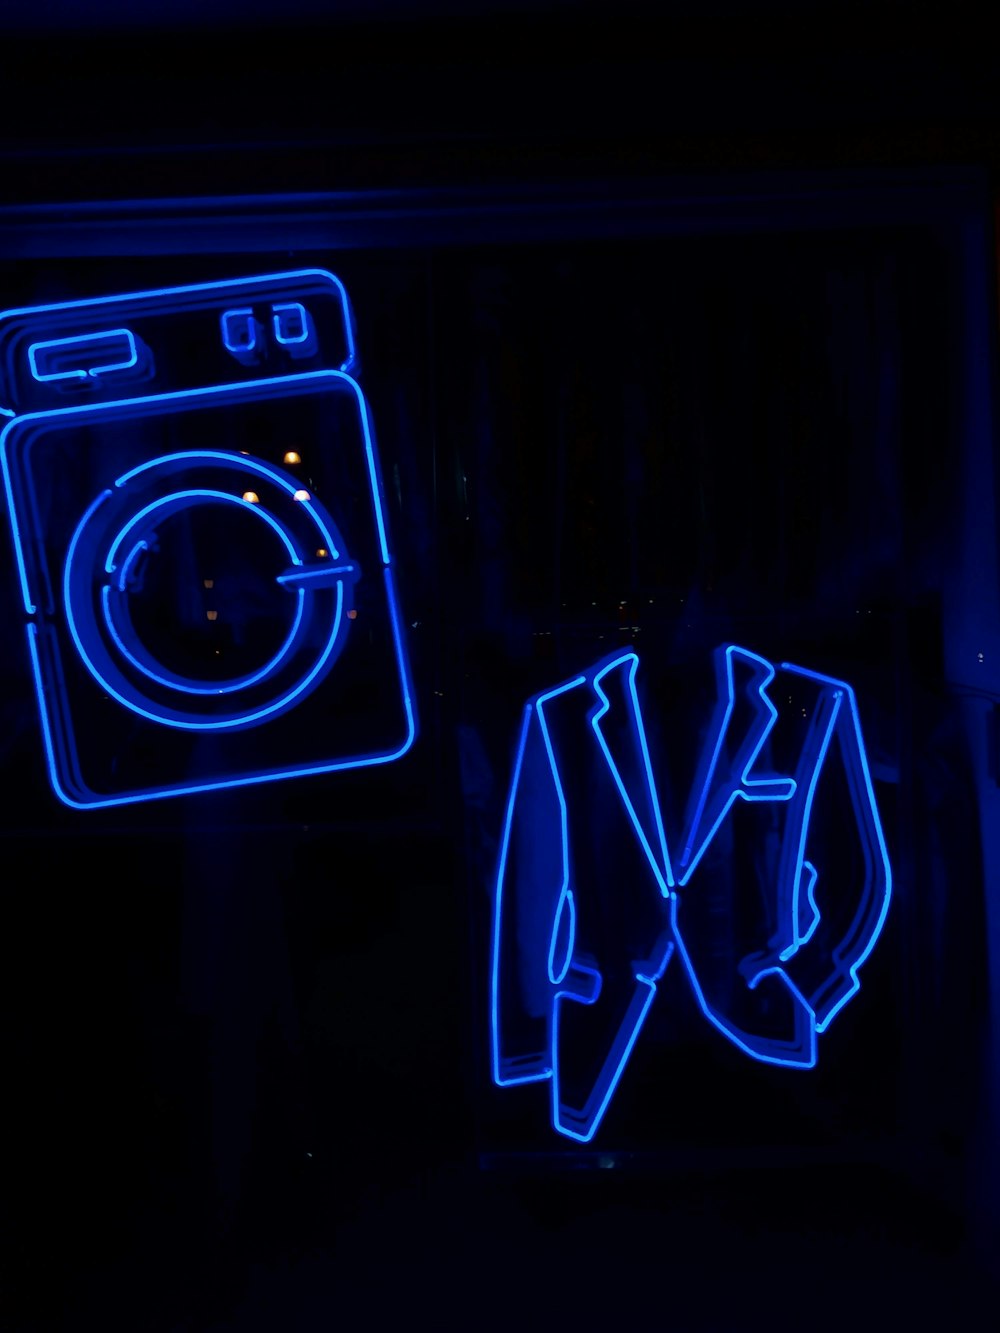 a washing machine in a dark room with blue neon lights